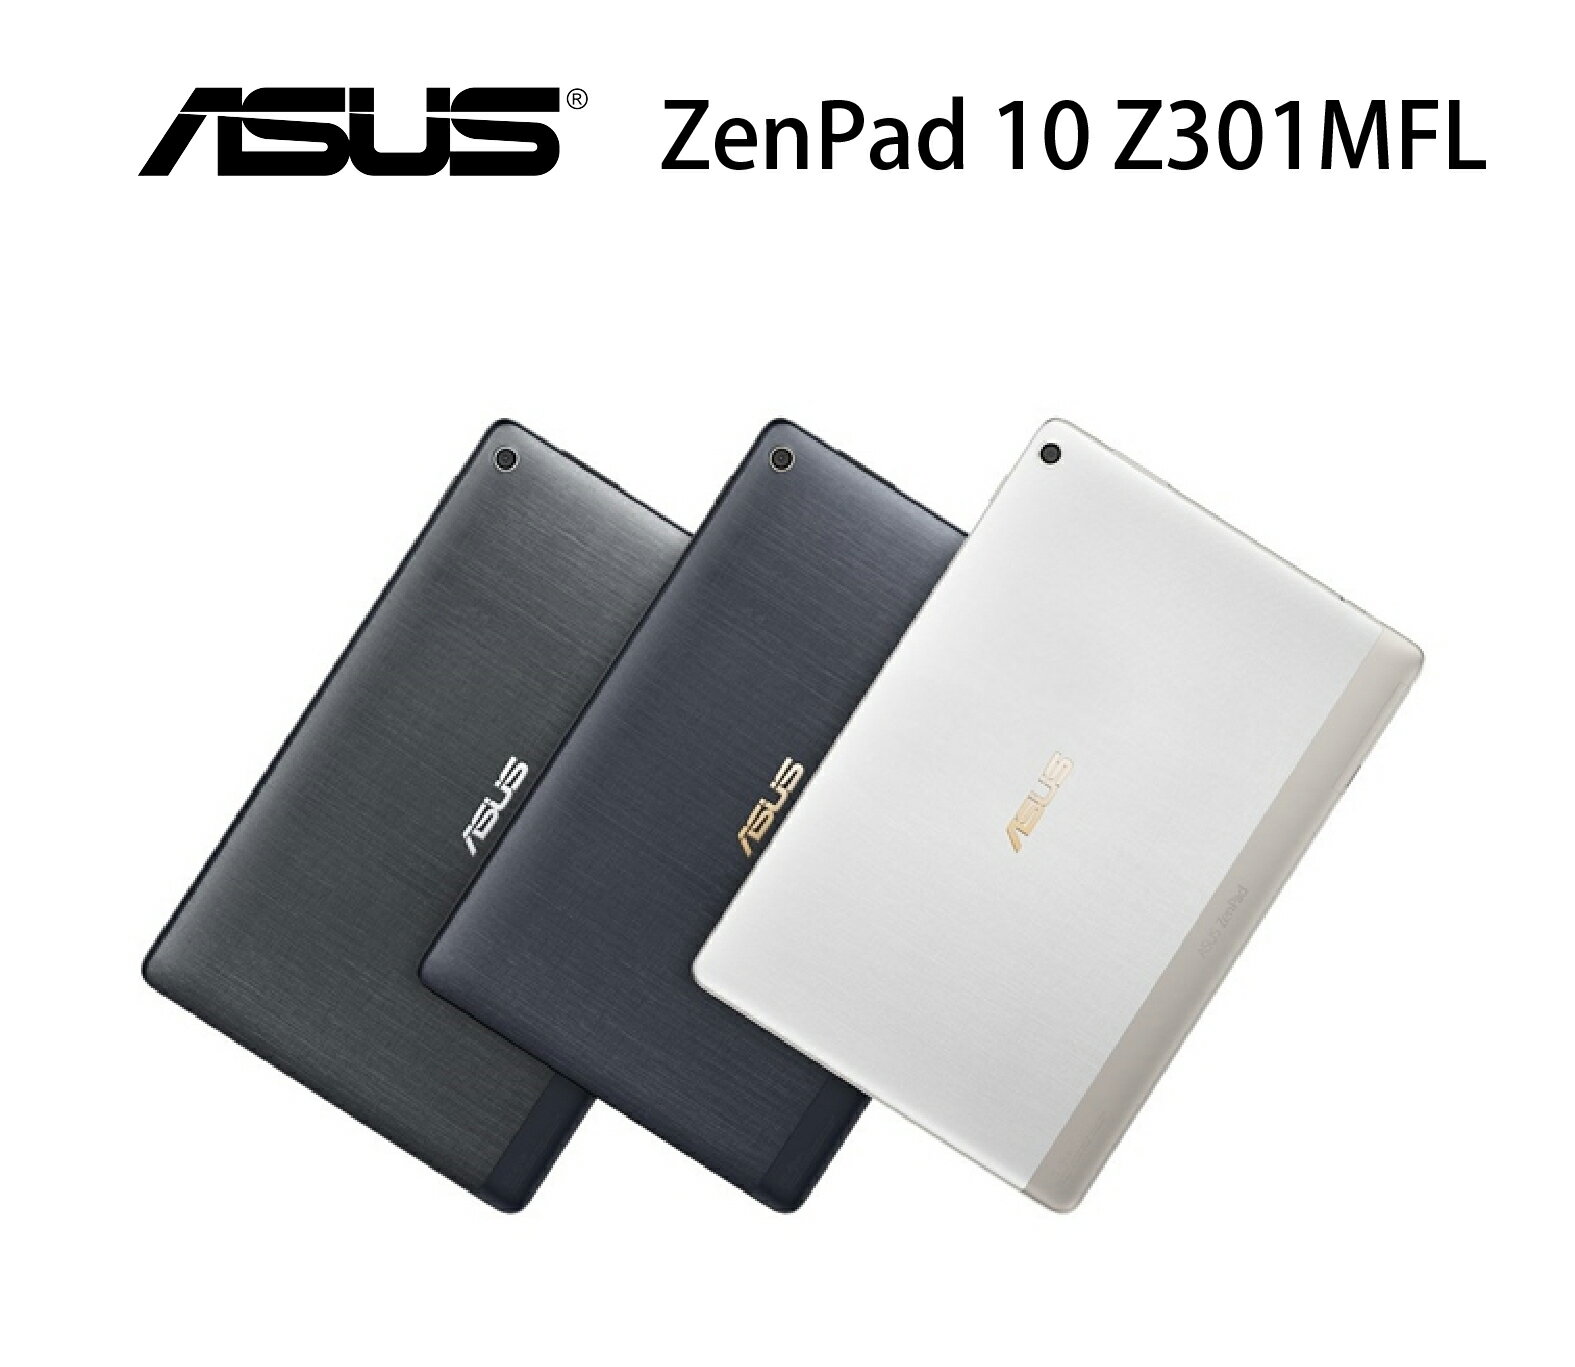  ASUS 華碩 ZenPad 10 Z301MFL 3G/32G 追劇平板 -灰/藍/白 《贈10000mAh行動電源》 最便宜